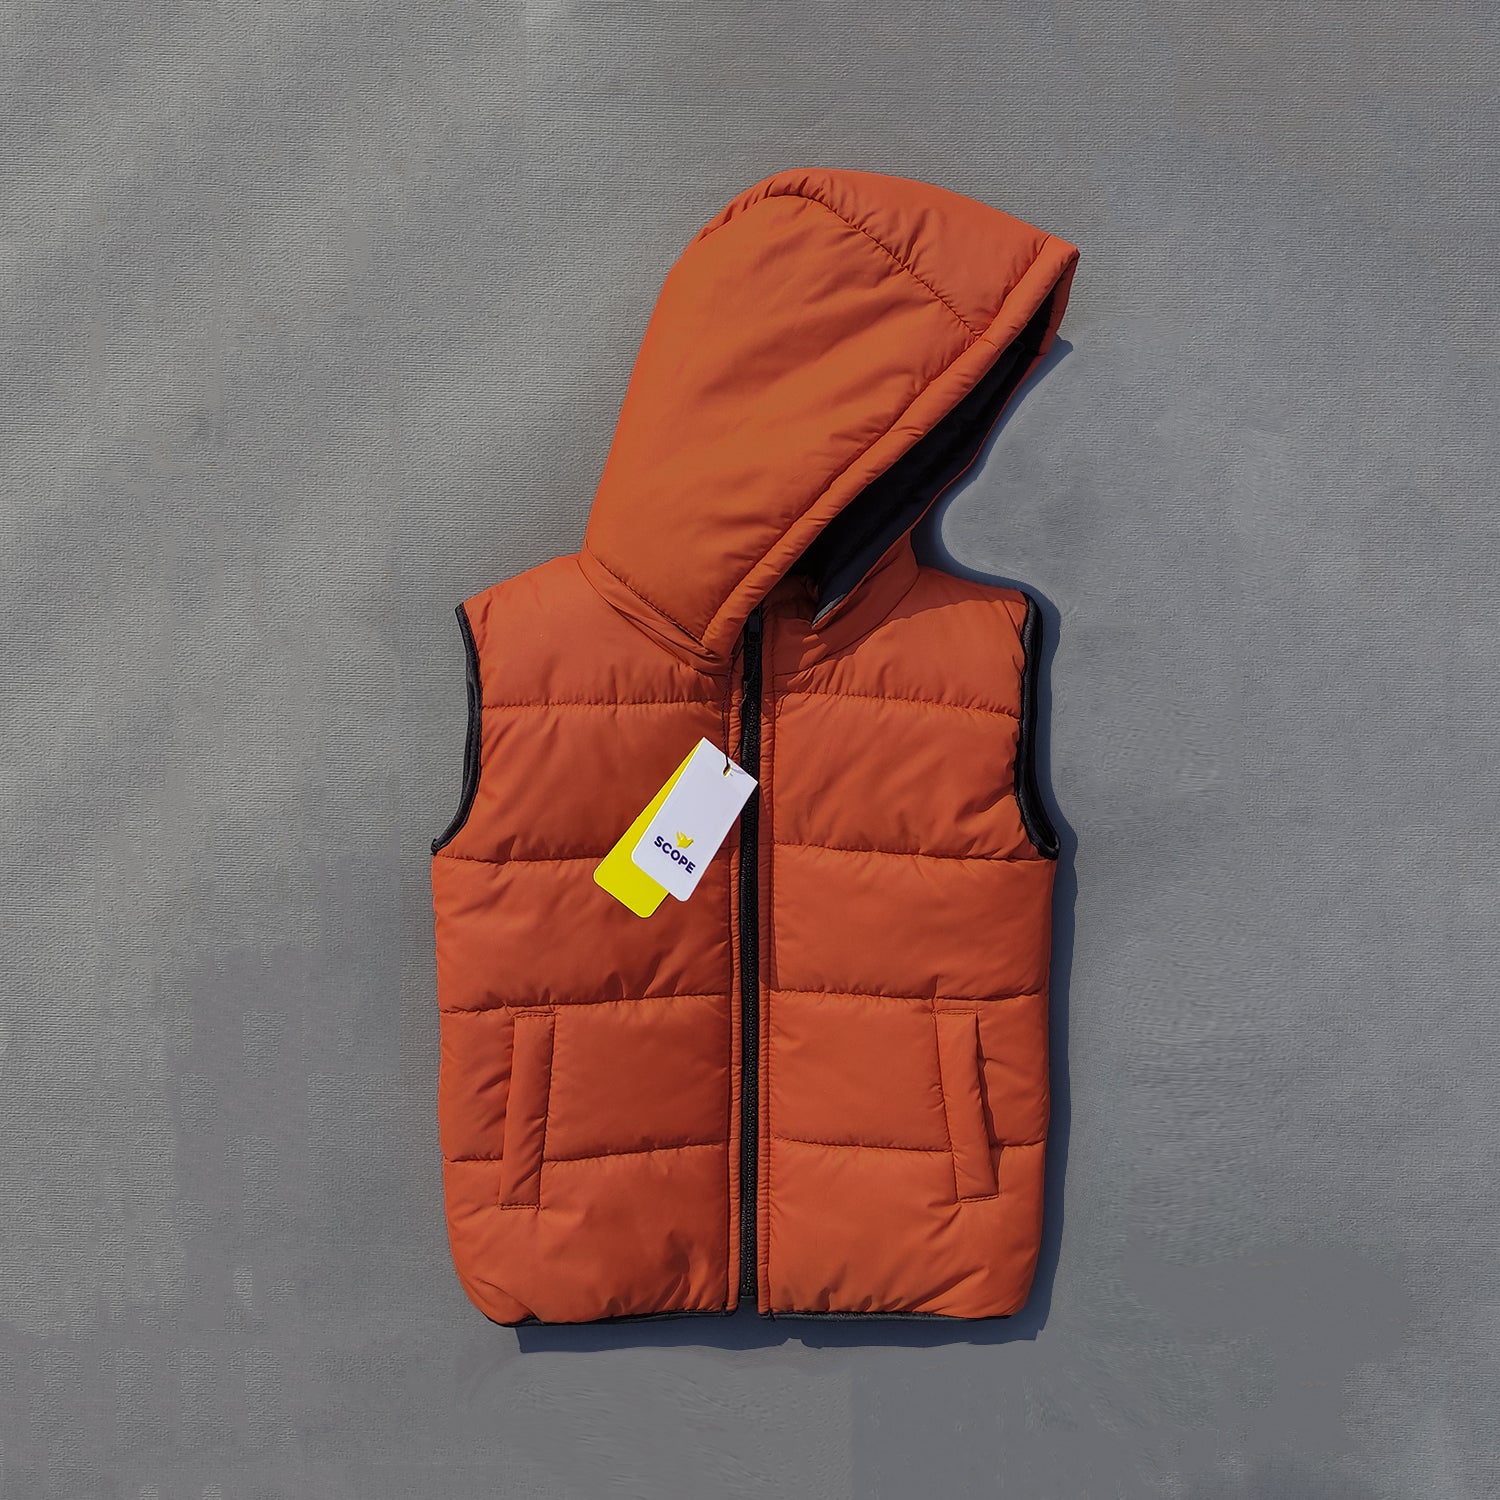 Rust Orange Sleeveless Puffer Jacket